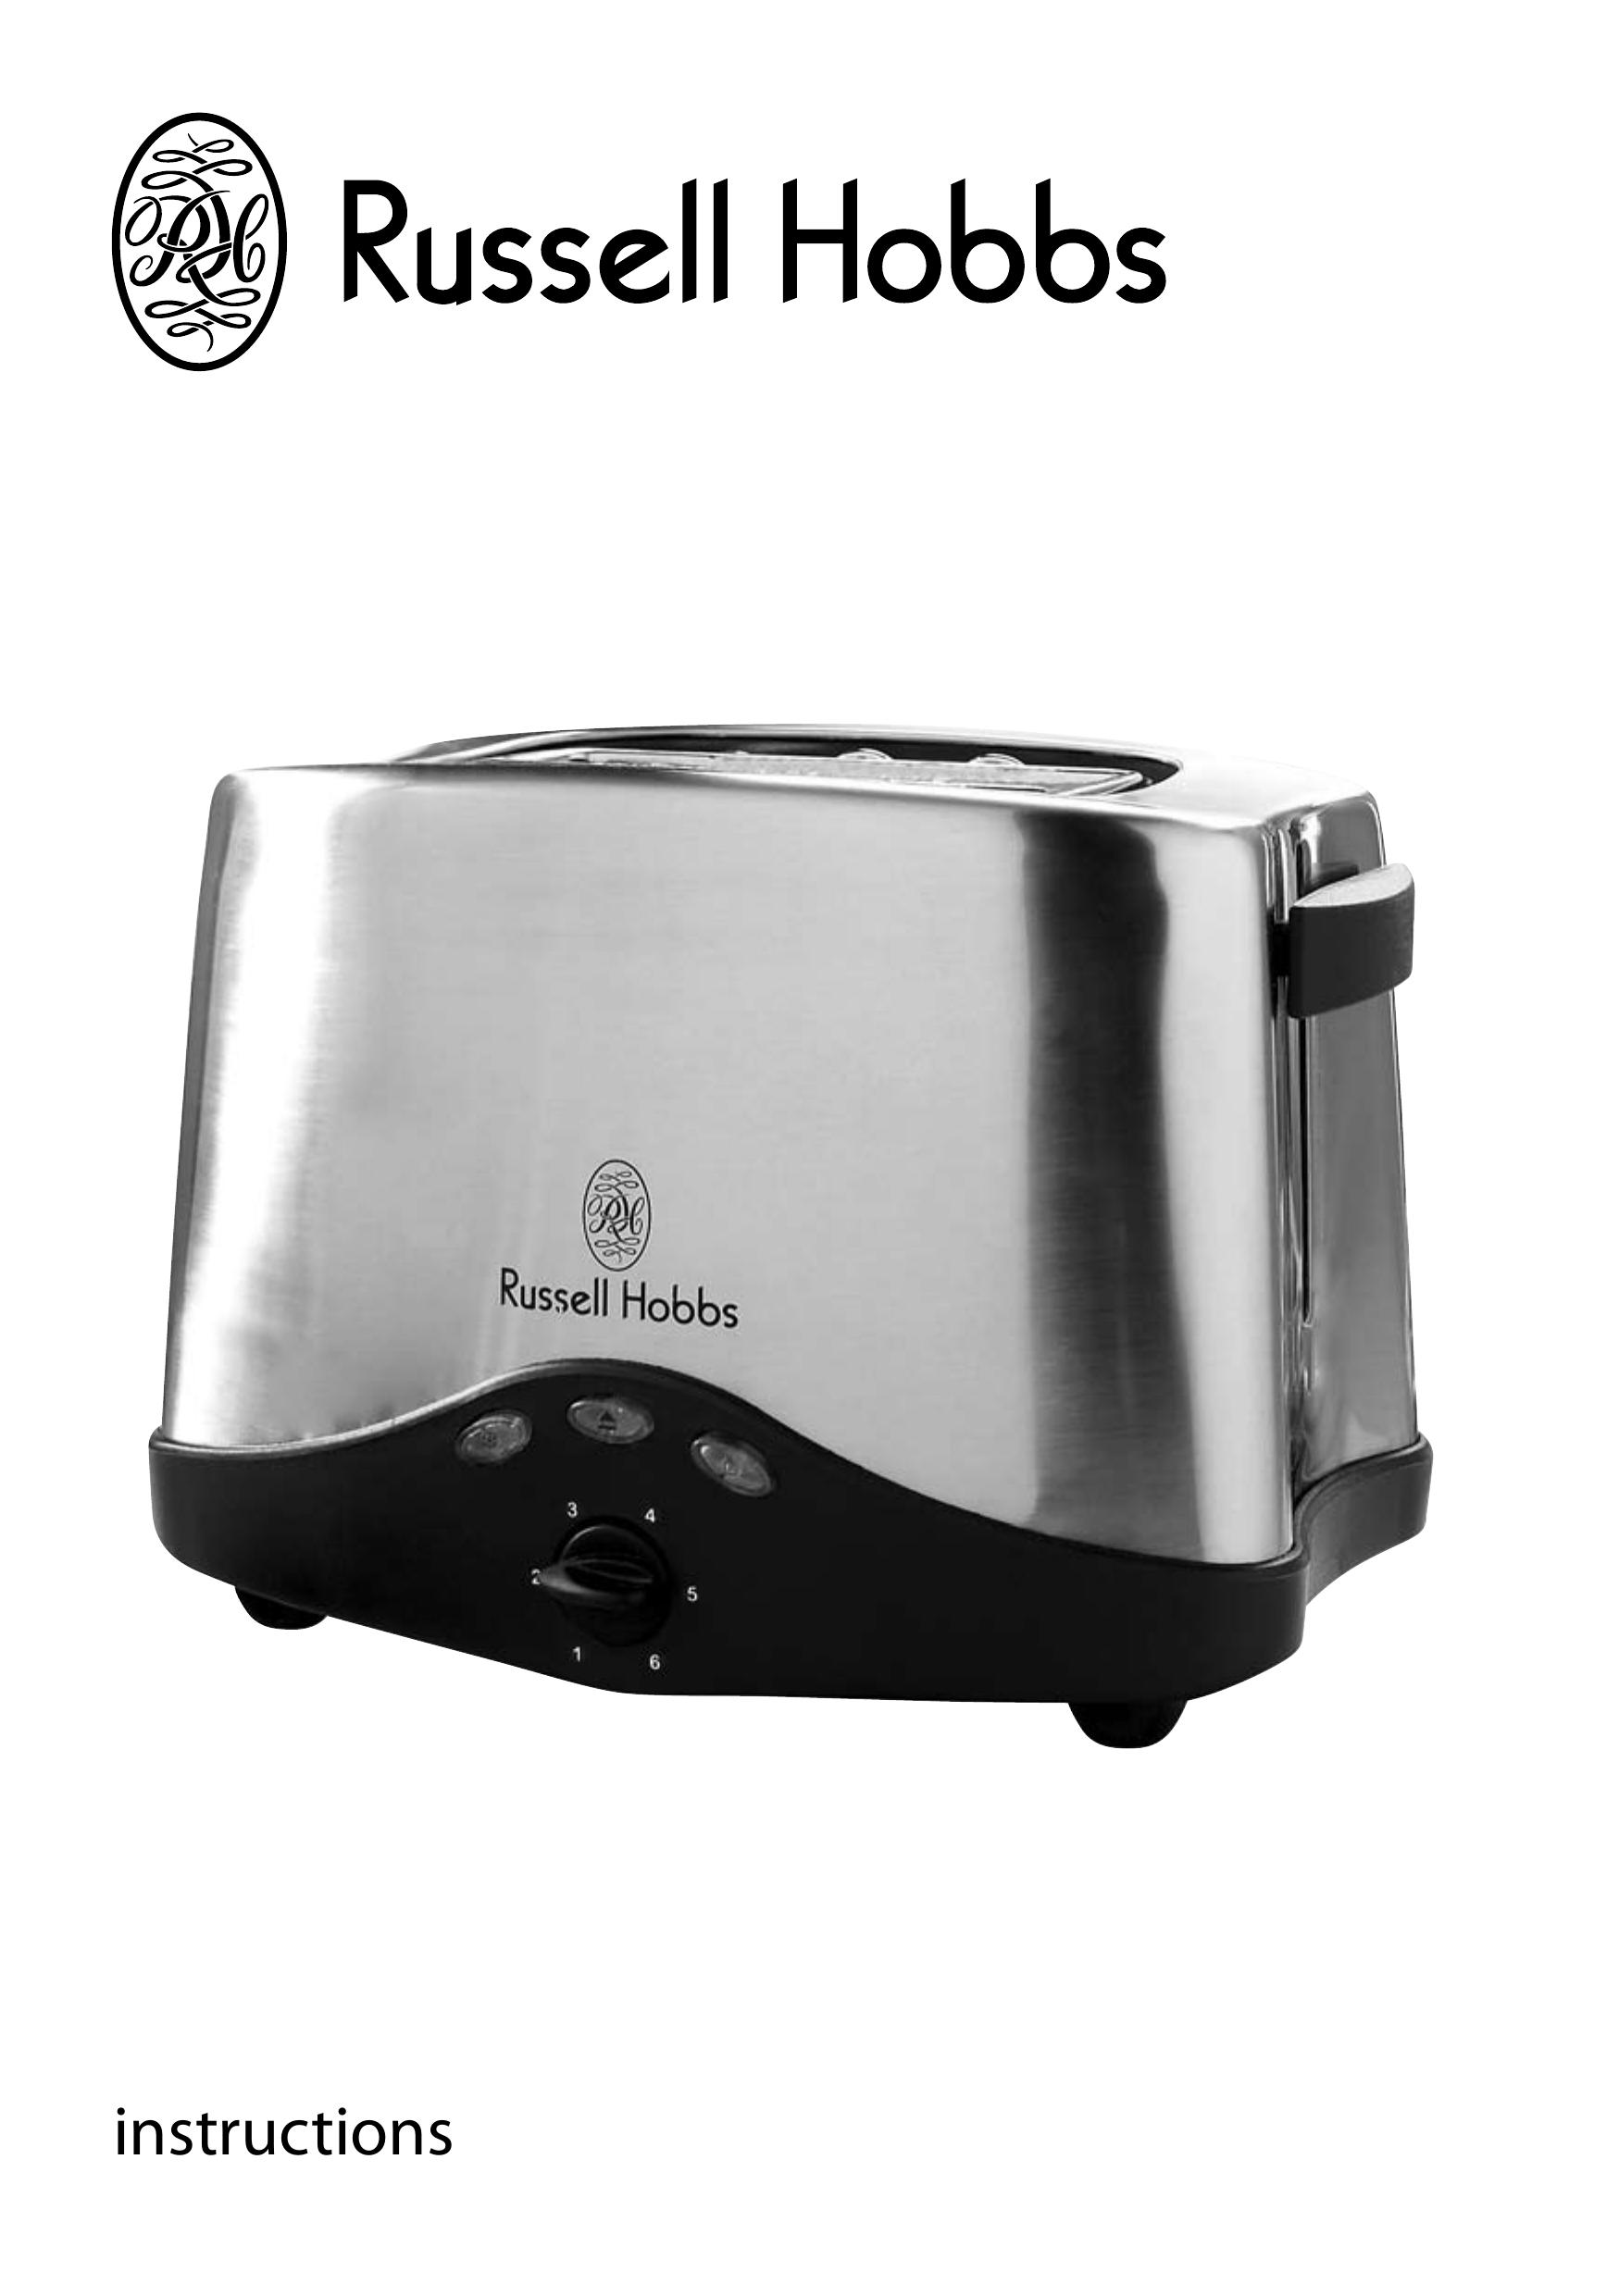 Russell Hobbs LF5061620 Toaster User Manual